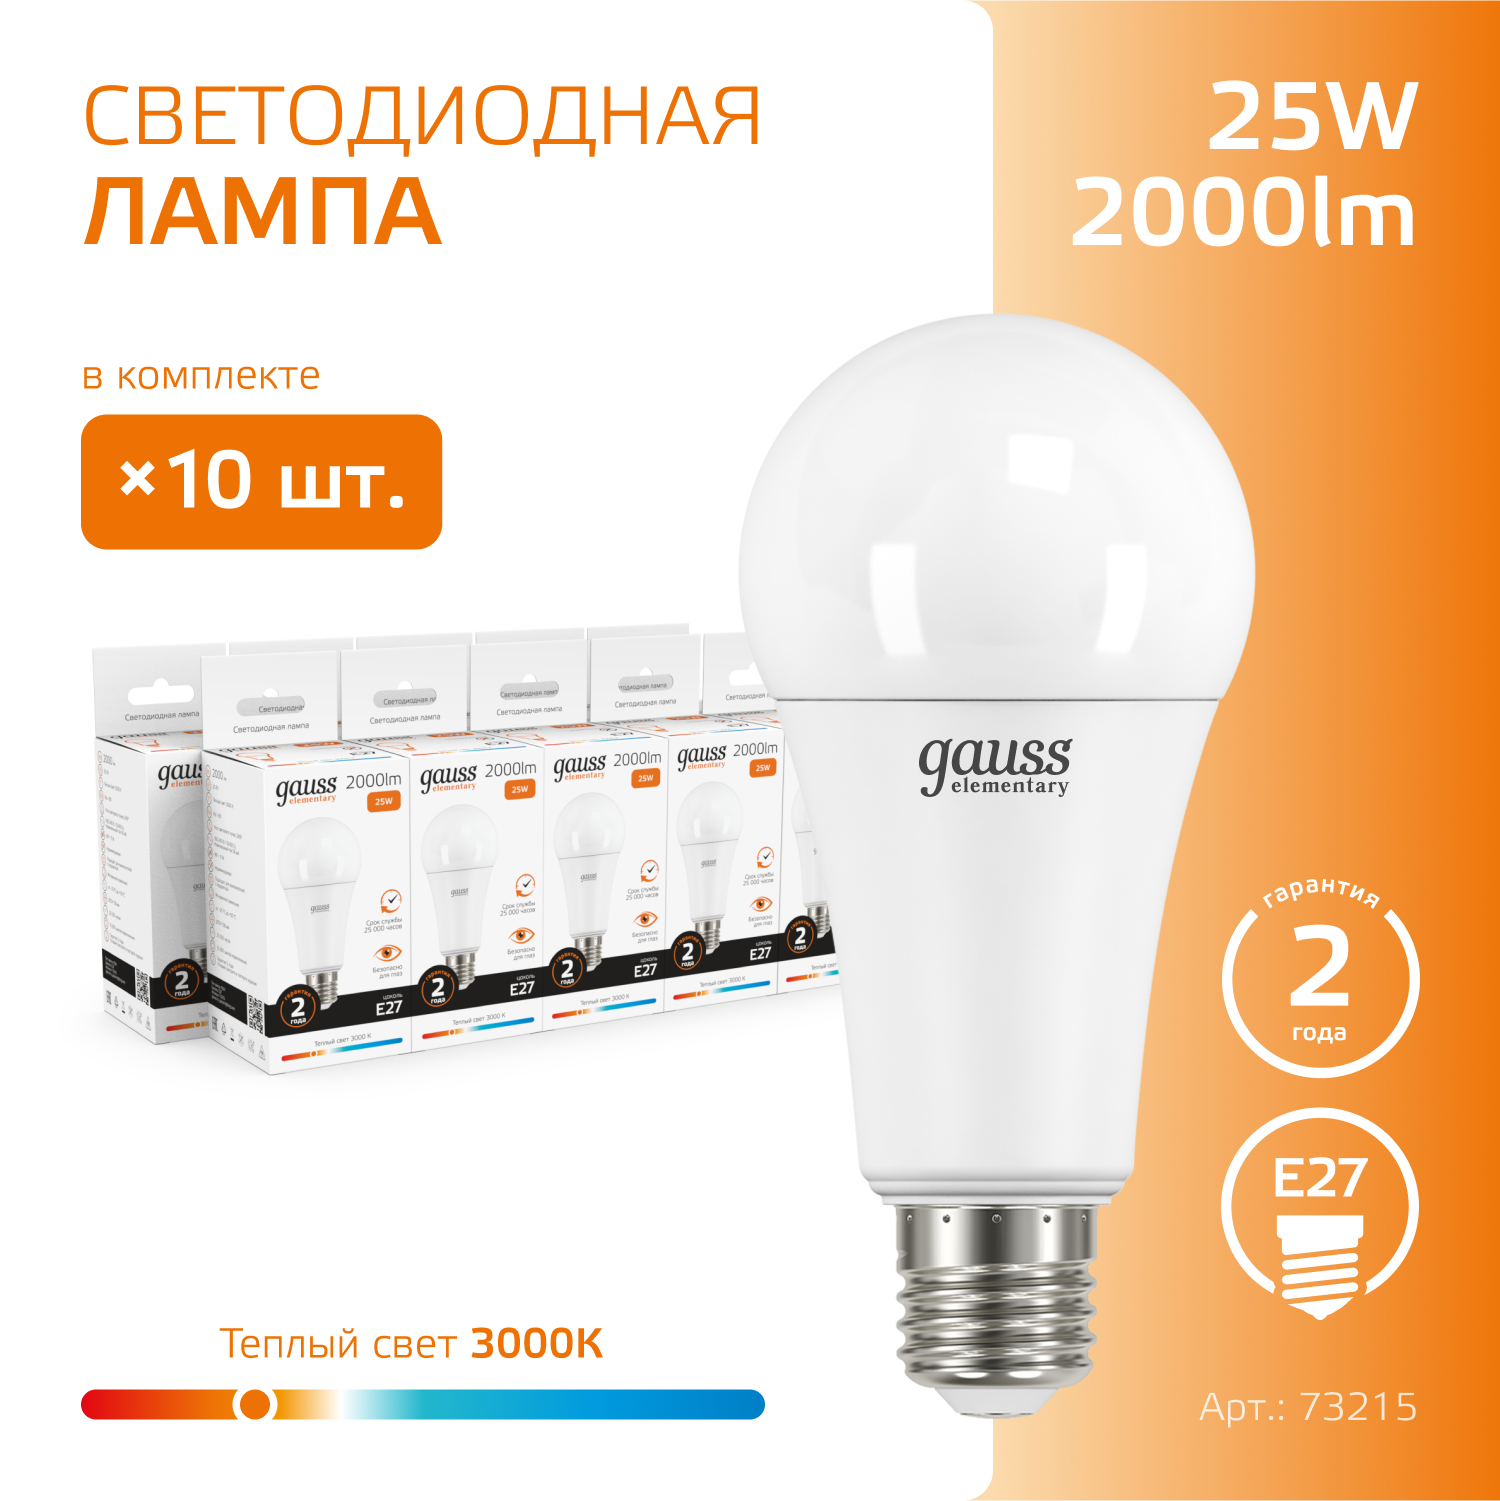 Лампочка светодиодная E27 Груша 25W теплый свет 3000K упаковка 10 шт. Gauss Elementary